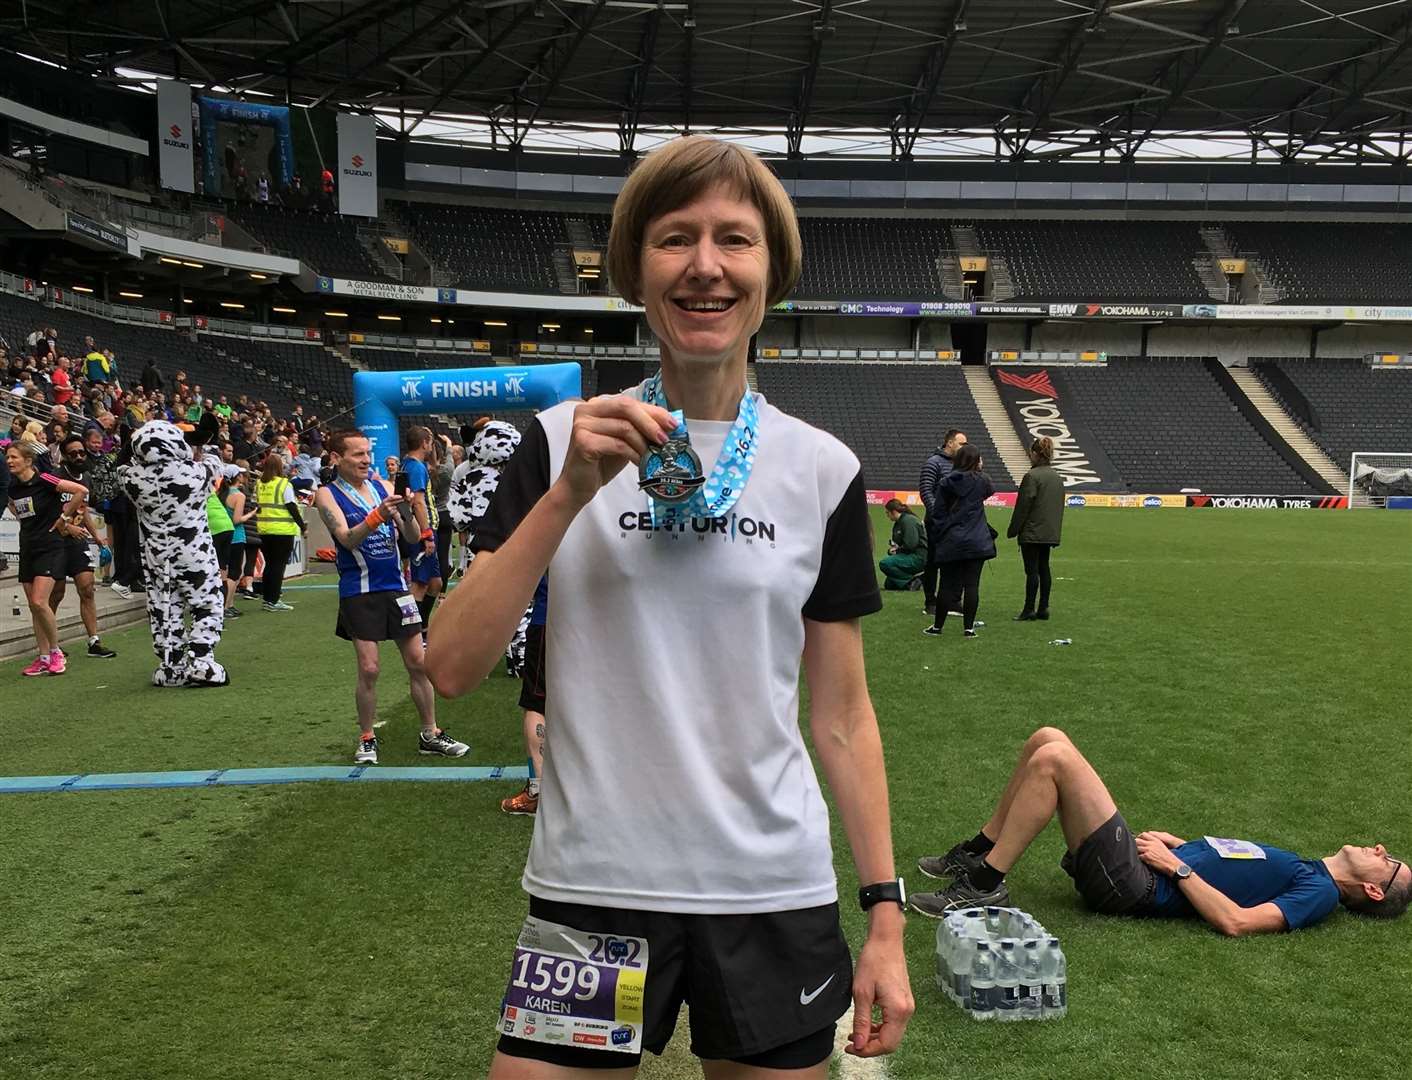 Karen at the end of Milton Keynes Marathon in 2019, where she ran her only under-four hour marathon